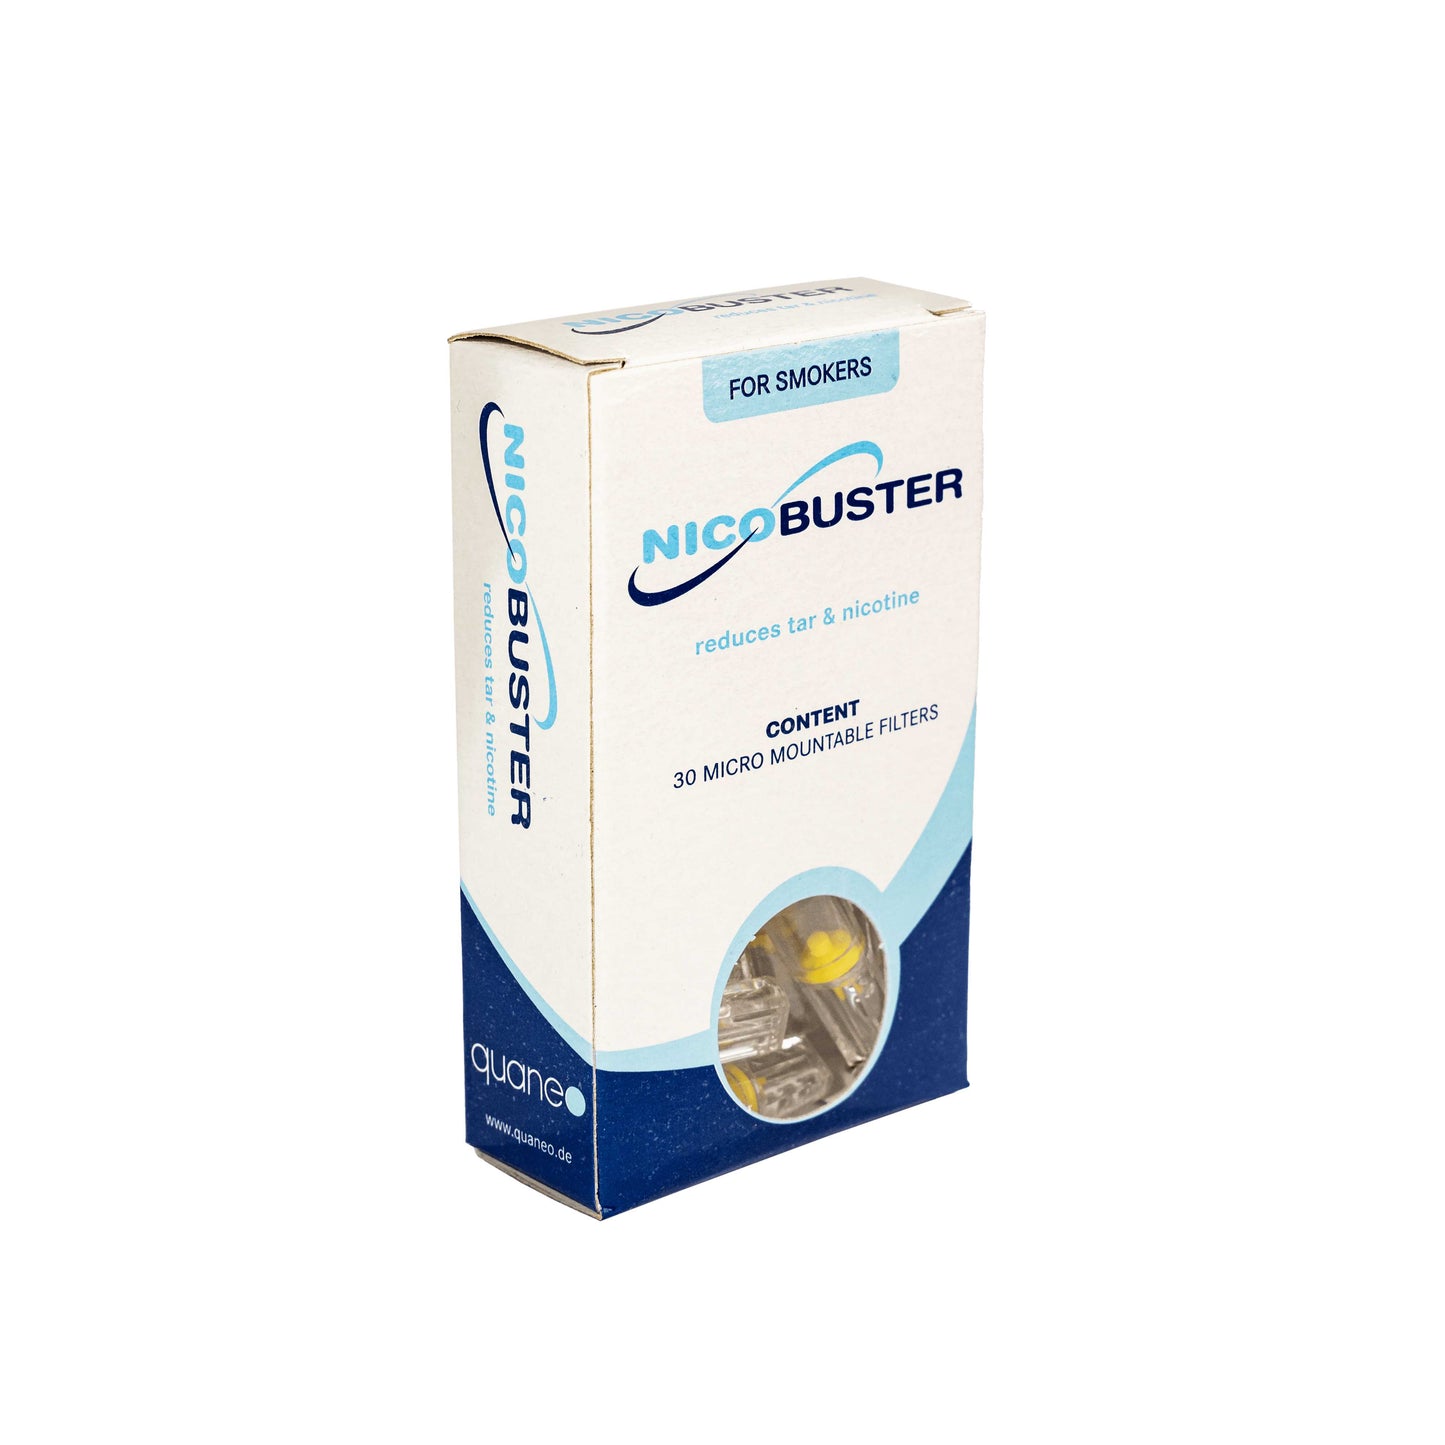 NicoBuster - Nicotine Filter - Filter Tips - NicoBuster - Cali Tobacconist